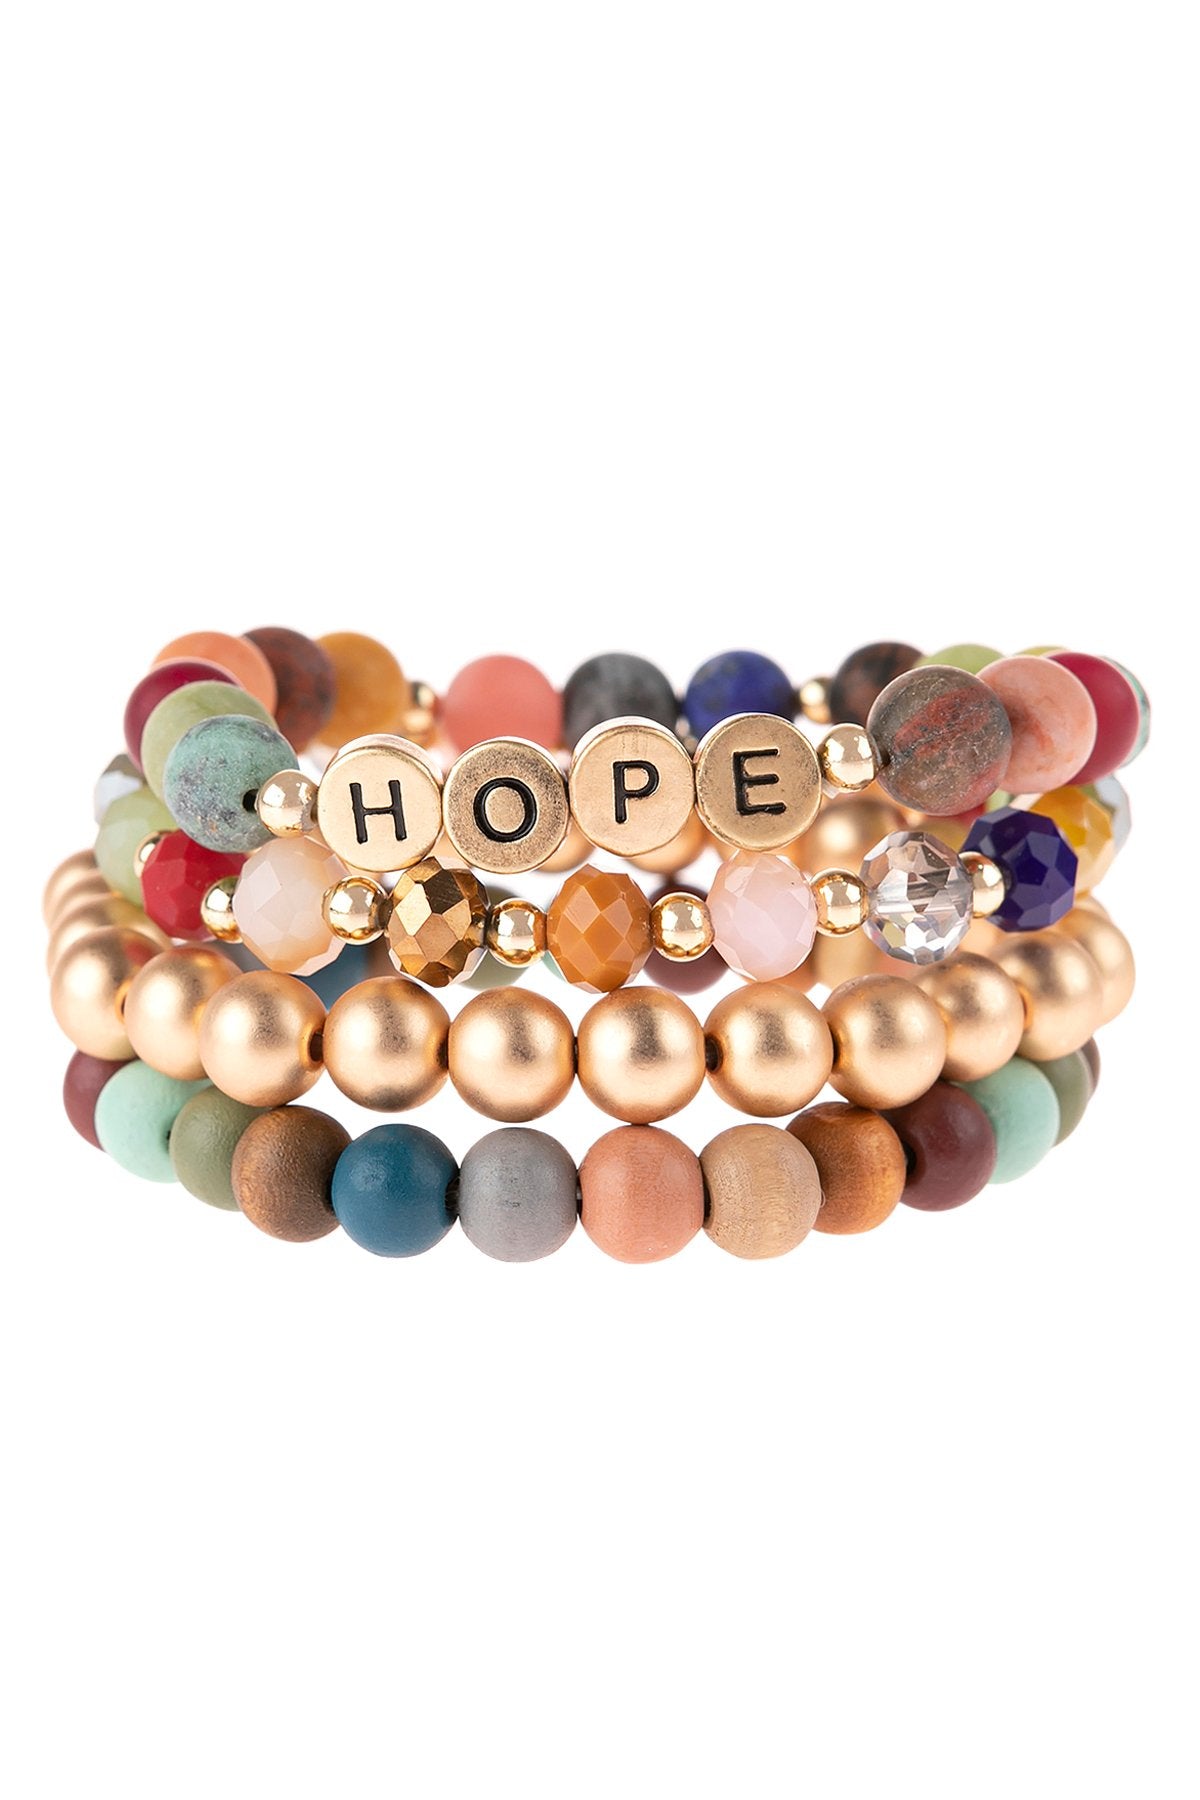 Hdb3024 - "Hope" Charm Multiline Beaded Bracelet